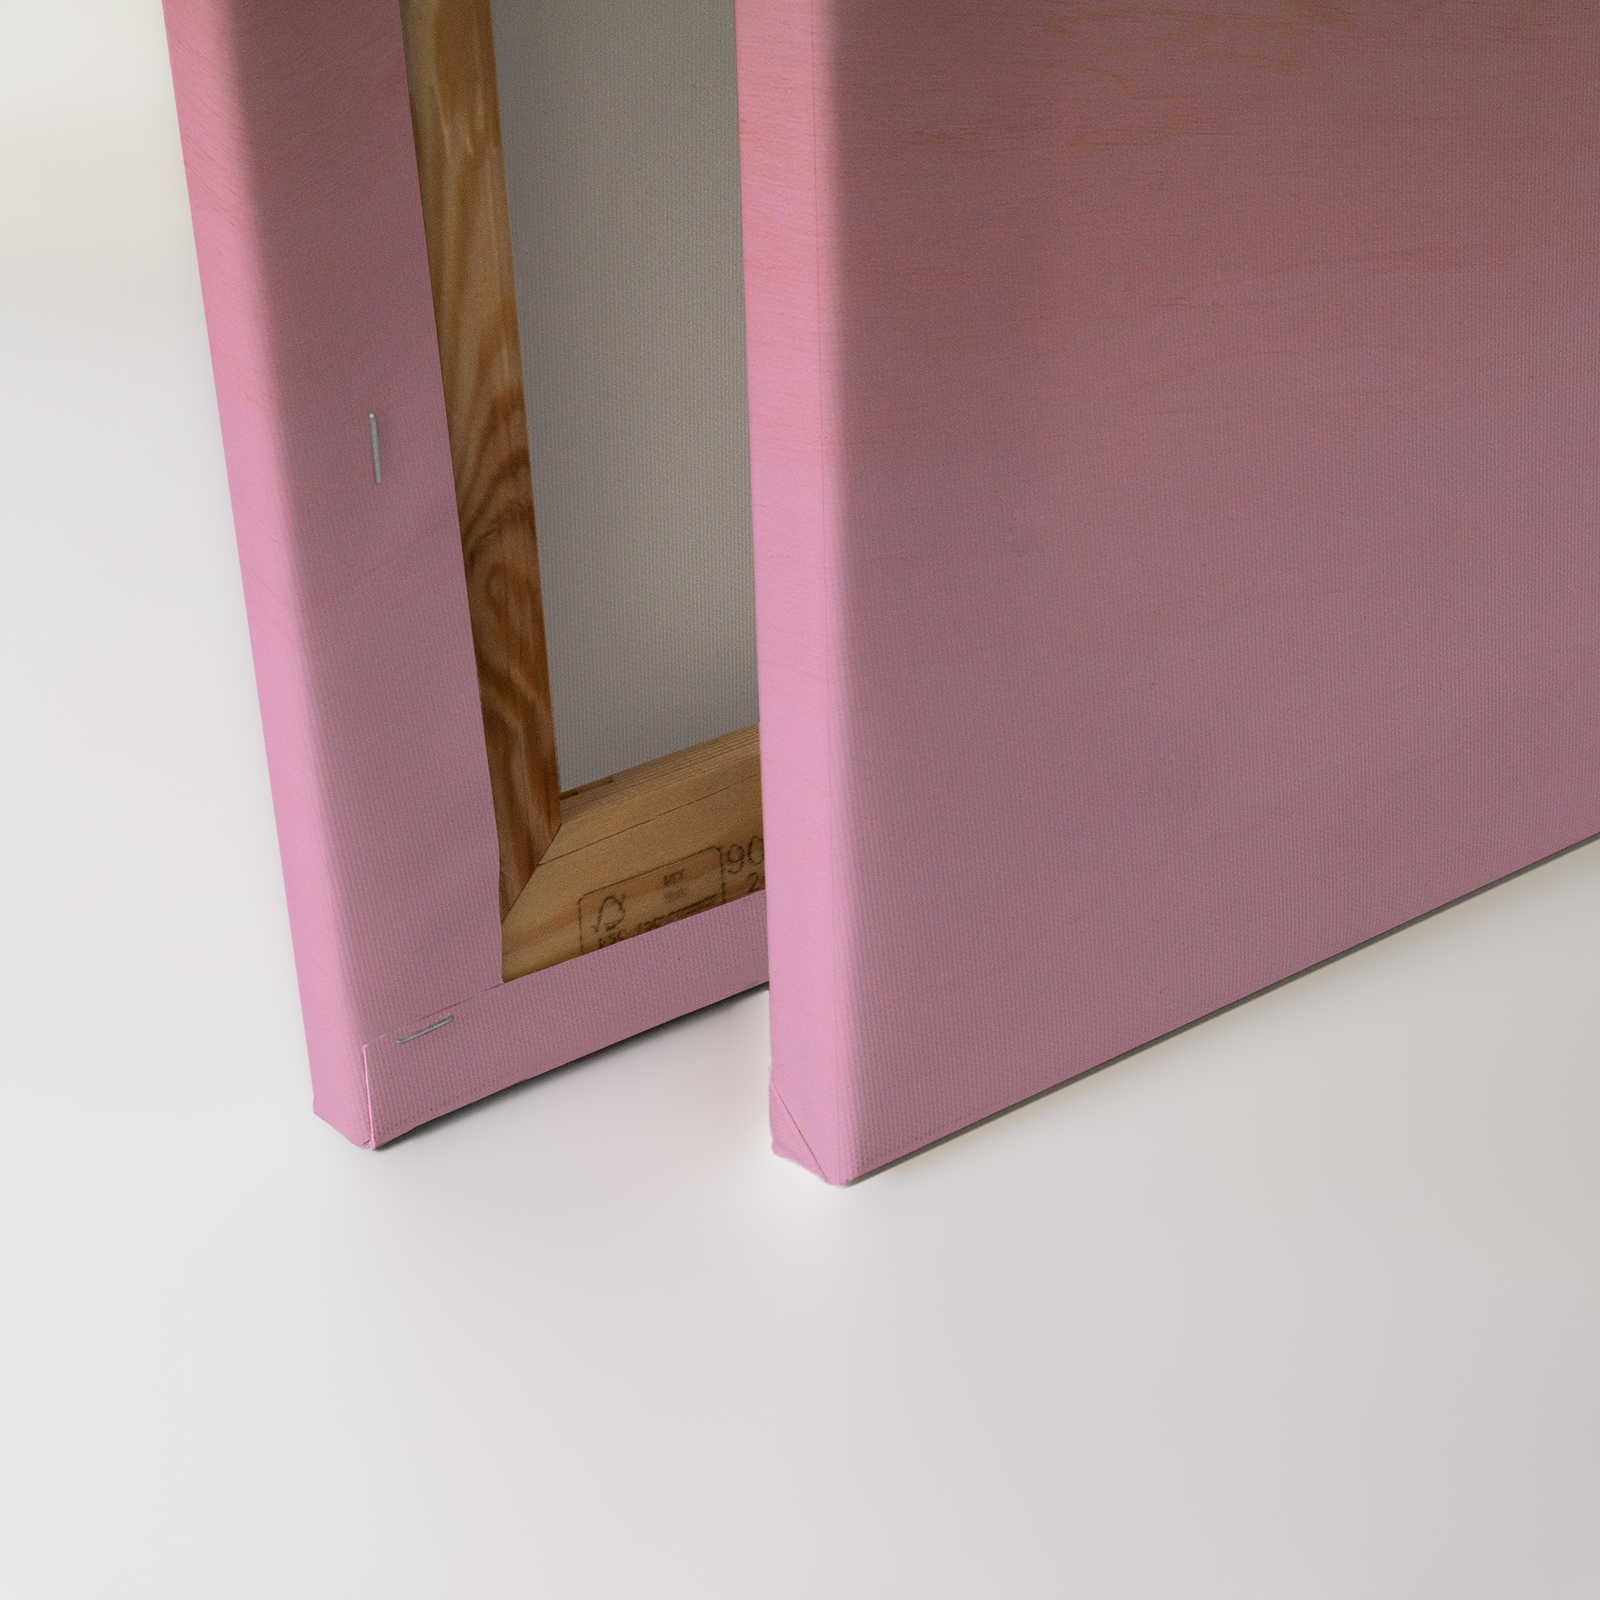             Workshop 1 - Canvas painting Pink Ombre Effect & Wood Grain - 0.90 m x 0.60 m
        